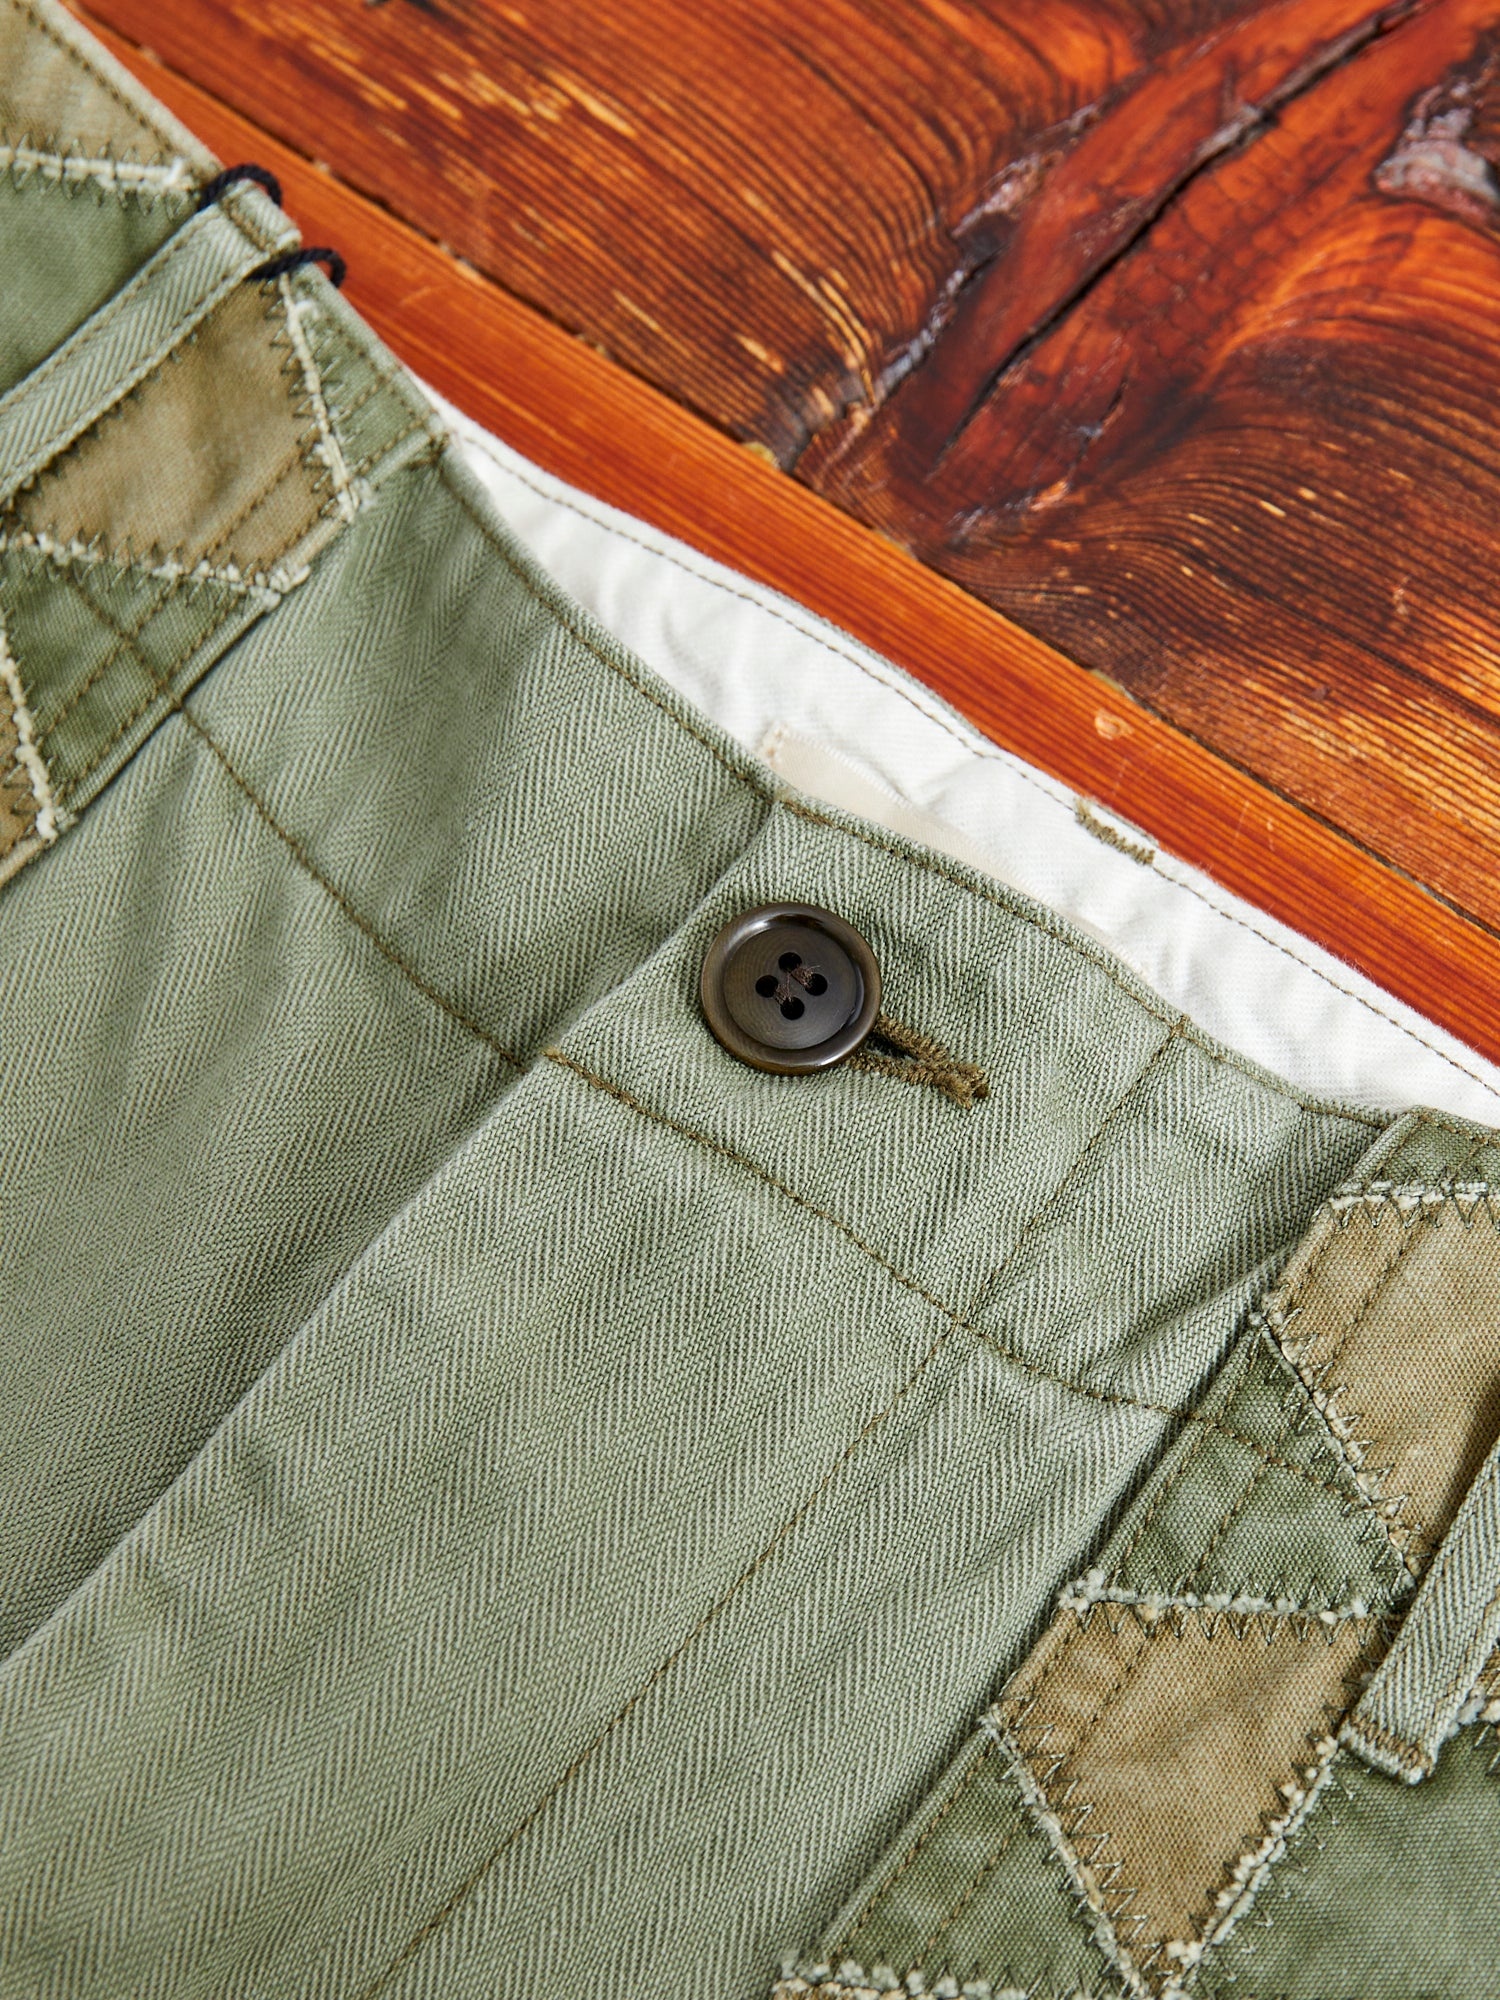 MSP-1014 Tsugihagi Baker Pants in Army Green - 4